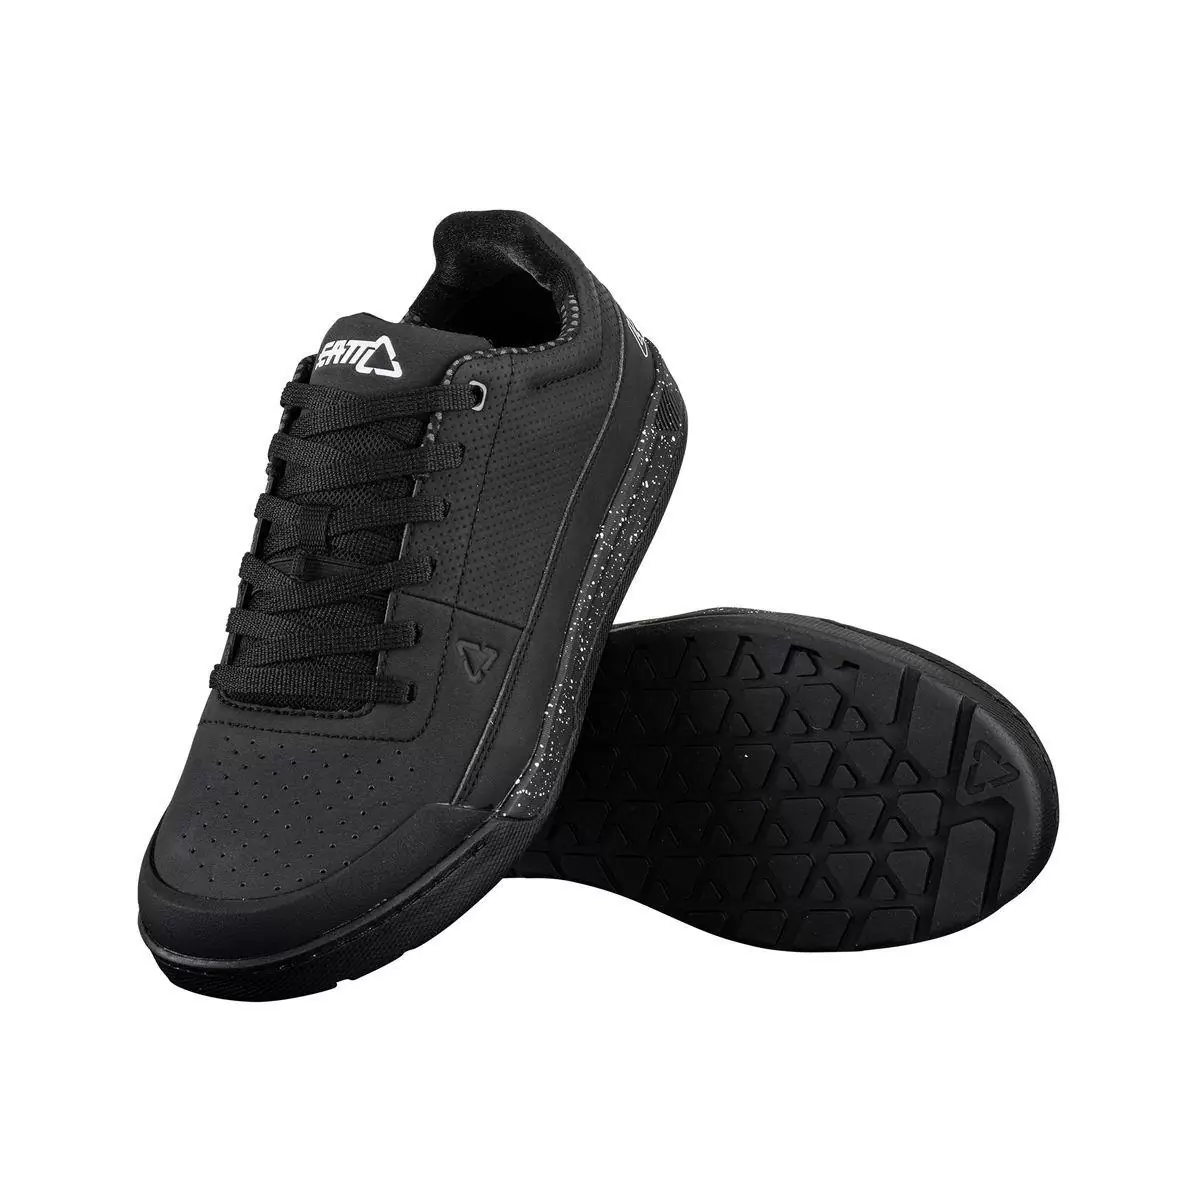 Mtb Shoes 2.0 Flat Black Size 43 #5